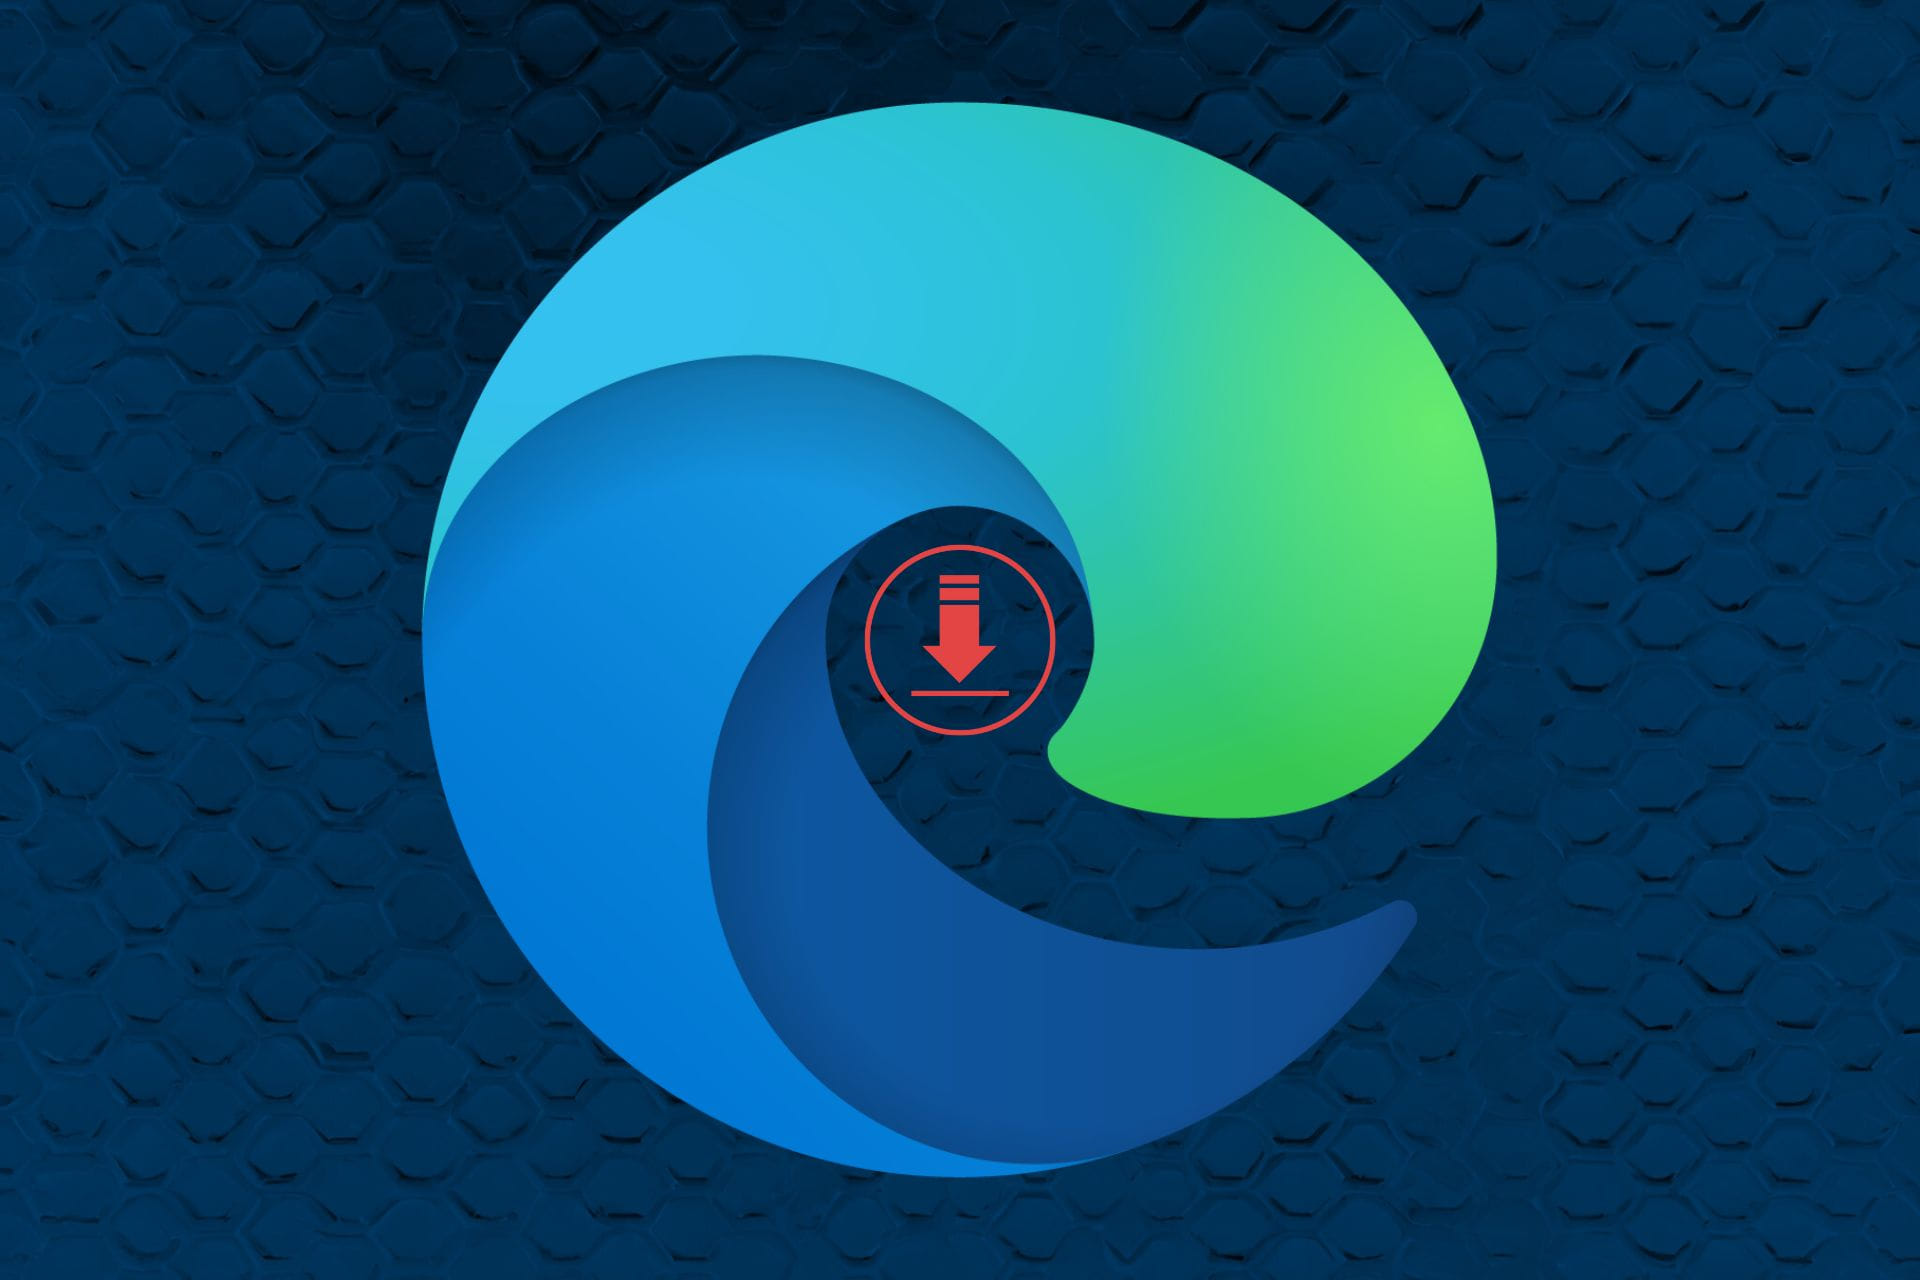 Microsoft Edge logo featuring a download symbol